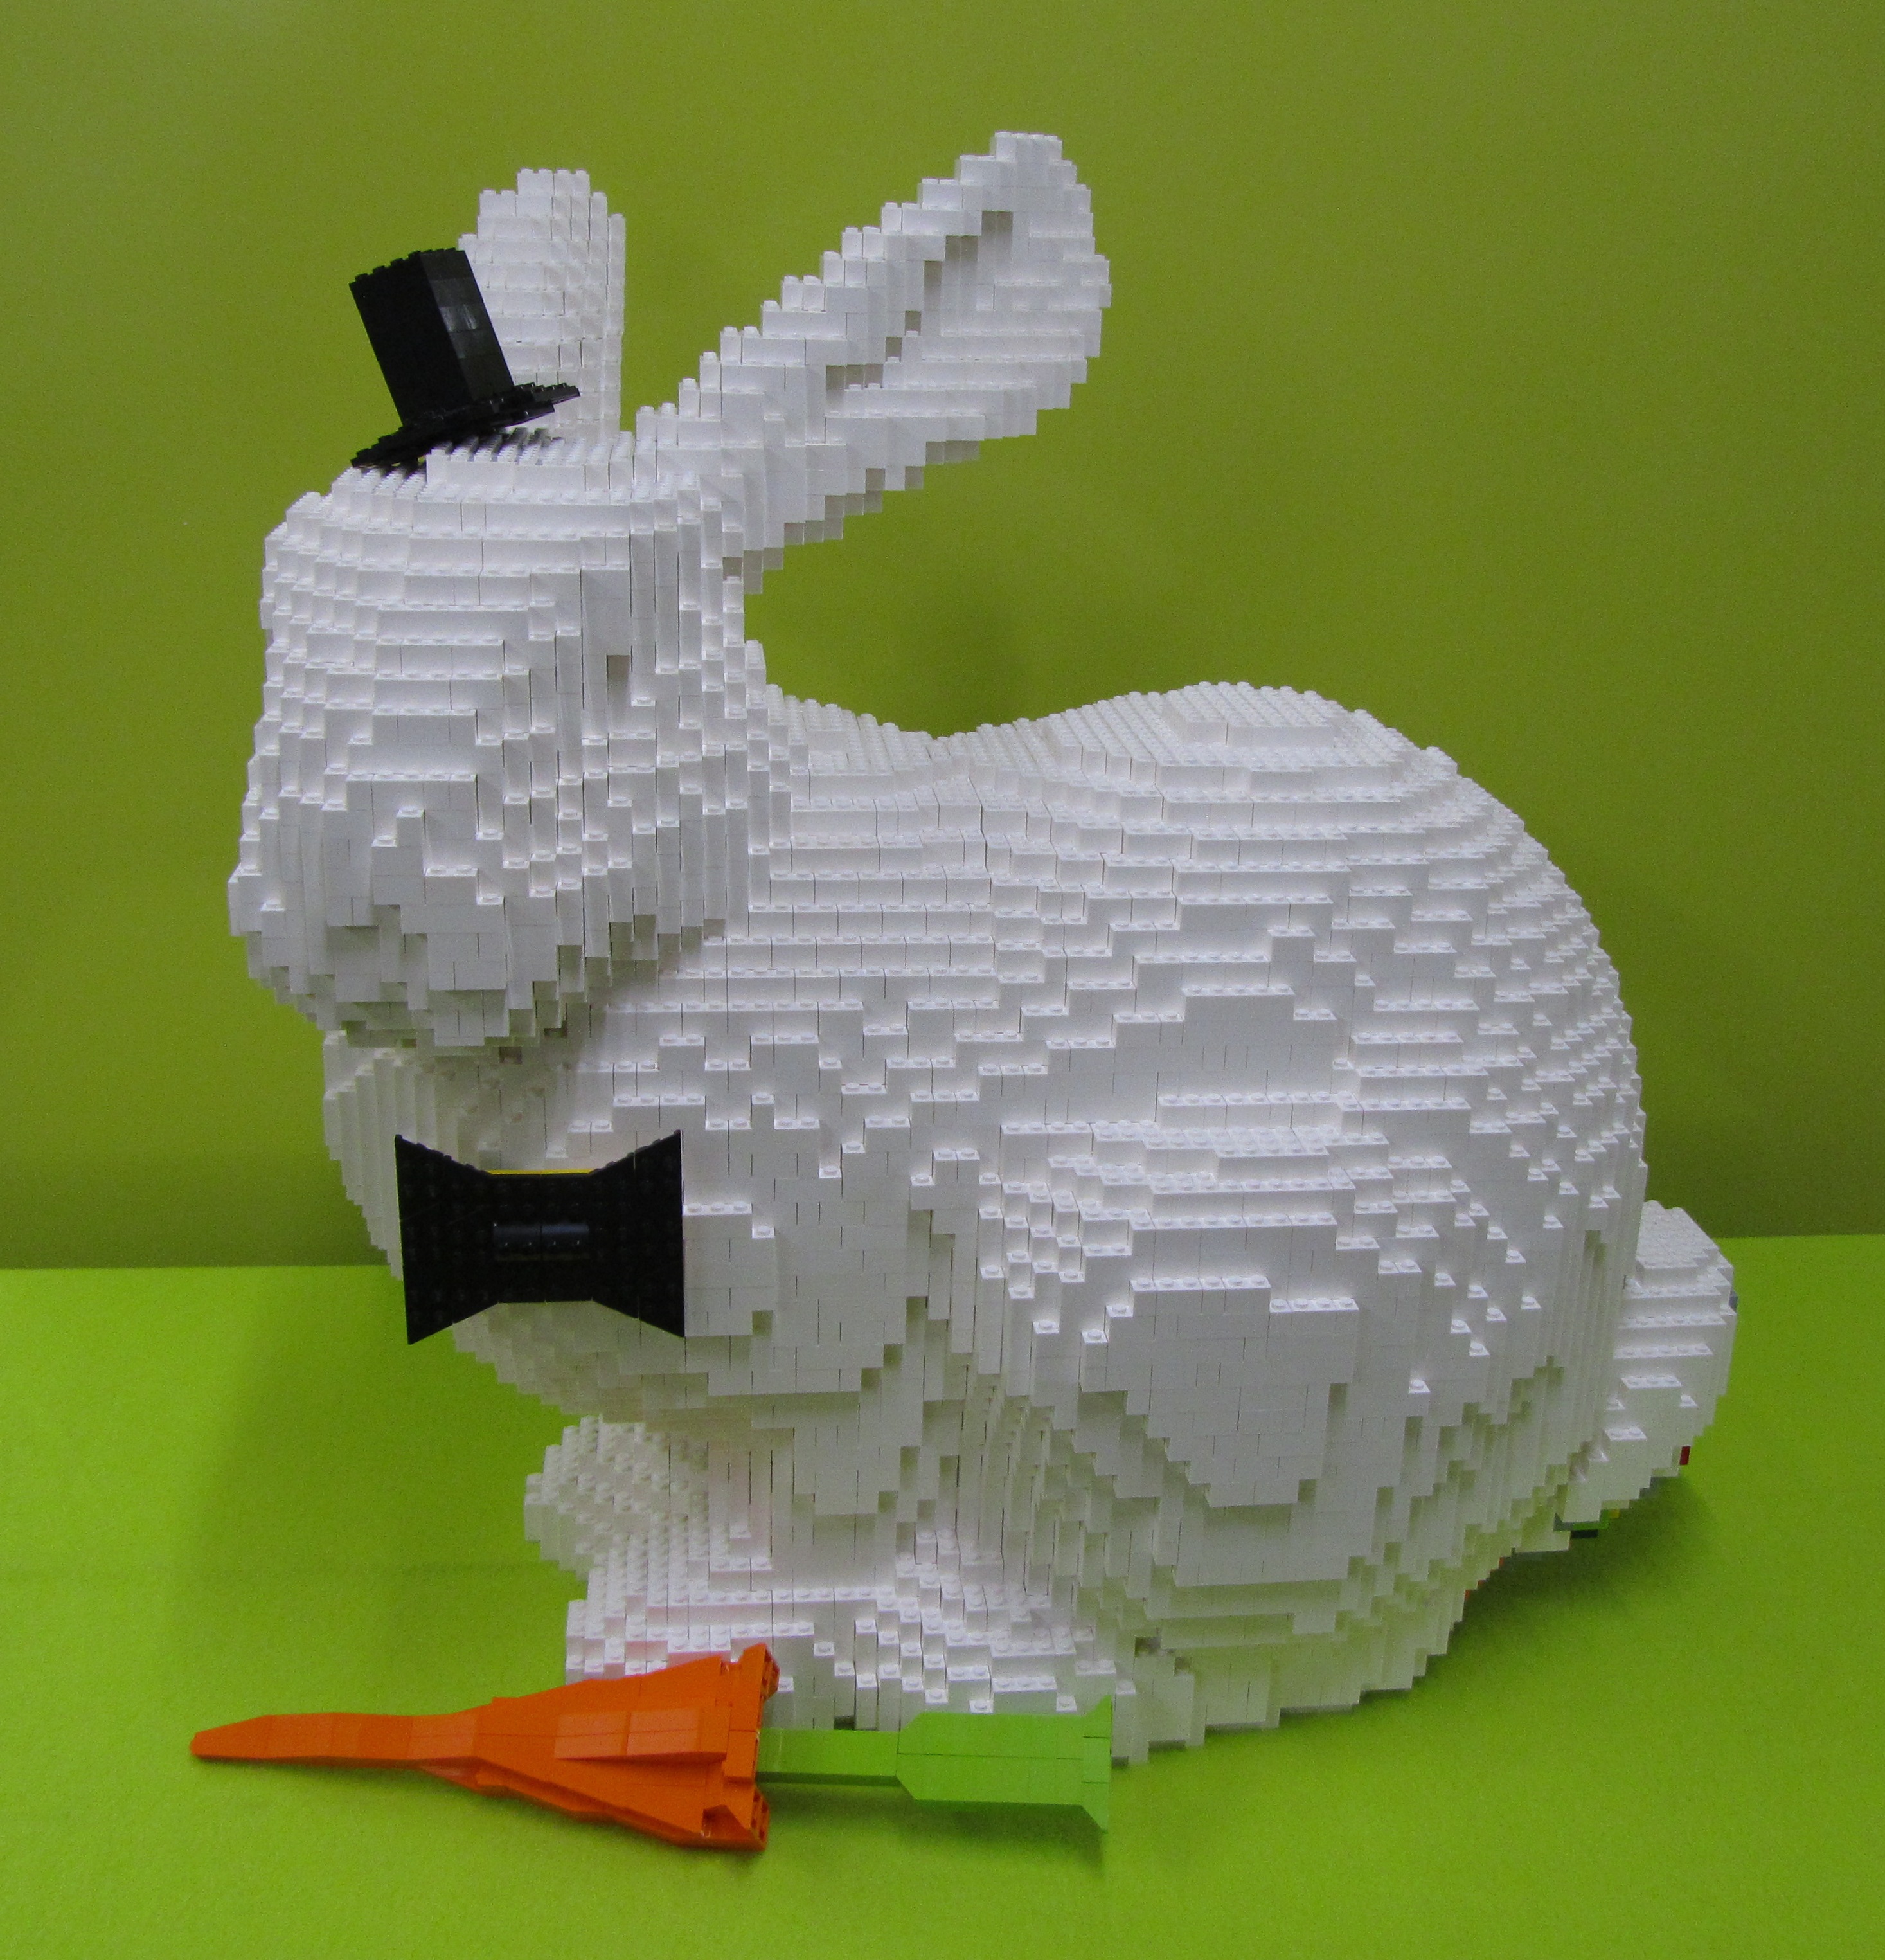 Leopold the Lego bunny, Lego Hase